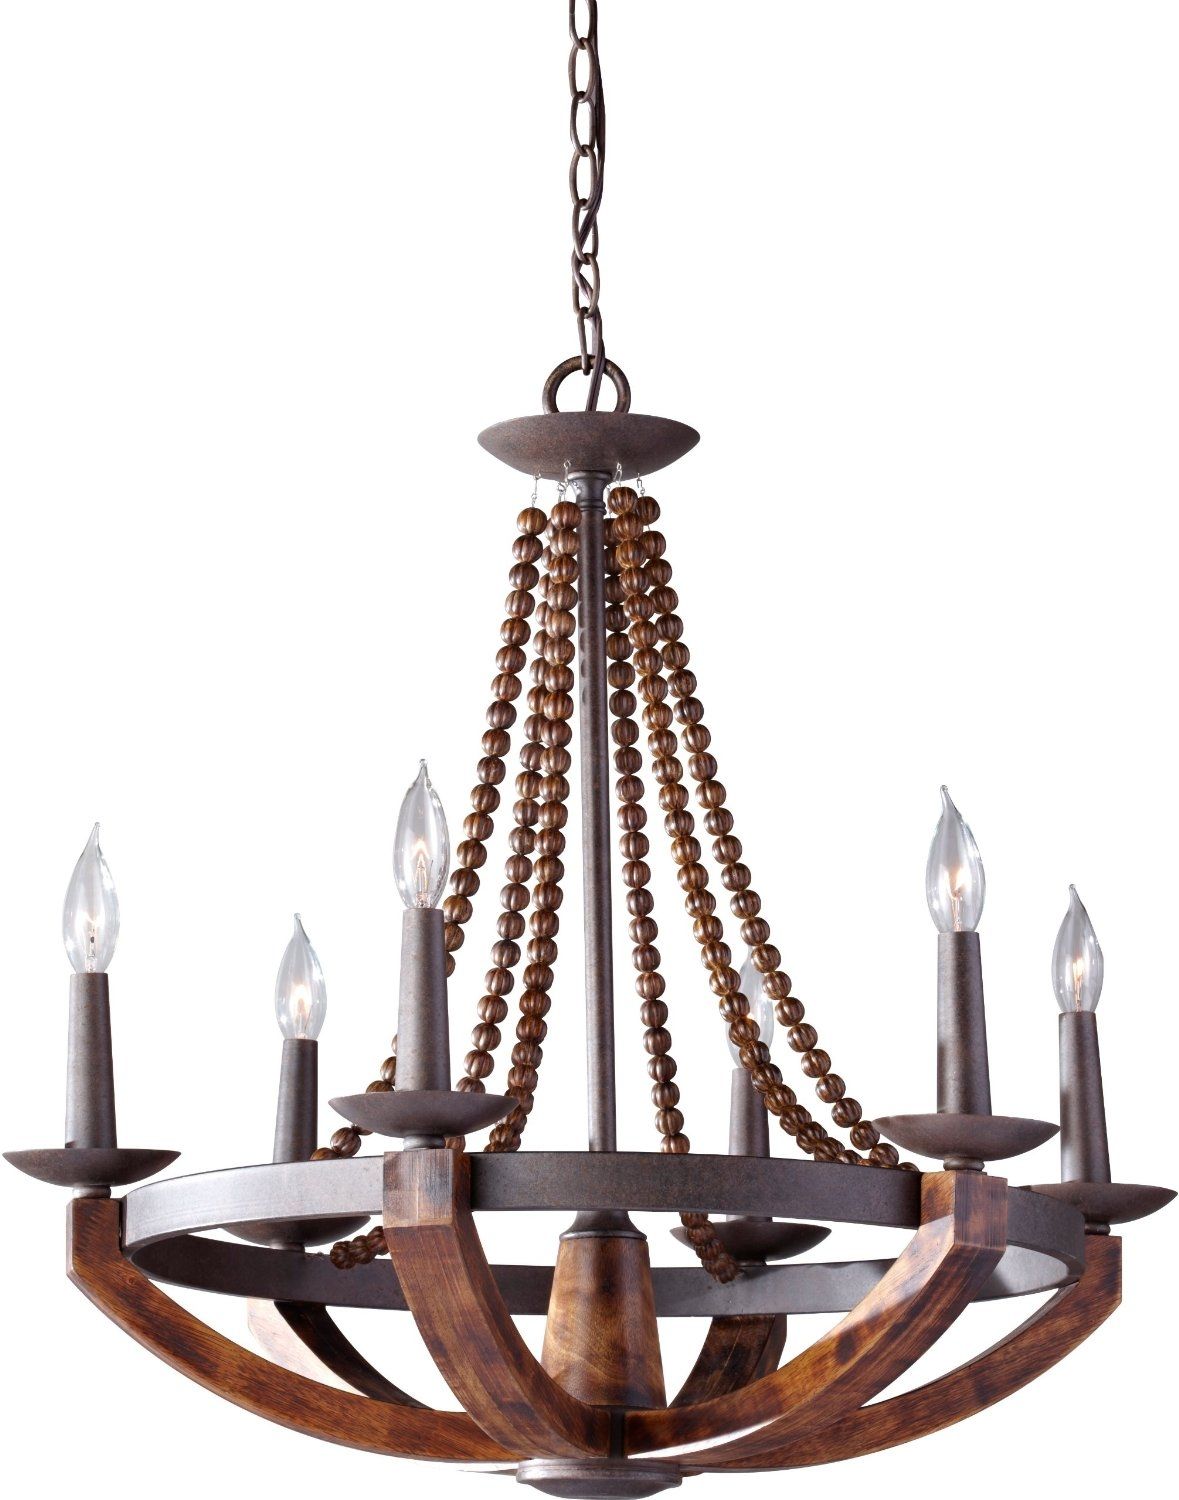 houzz wood chandelier